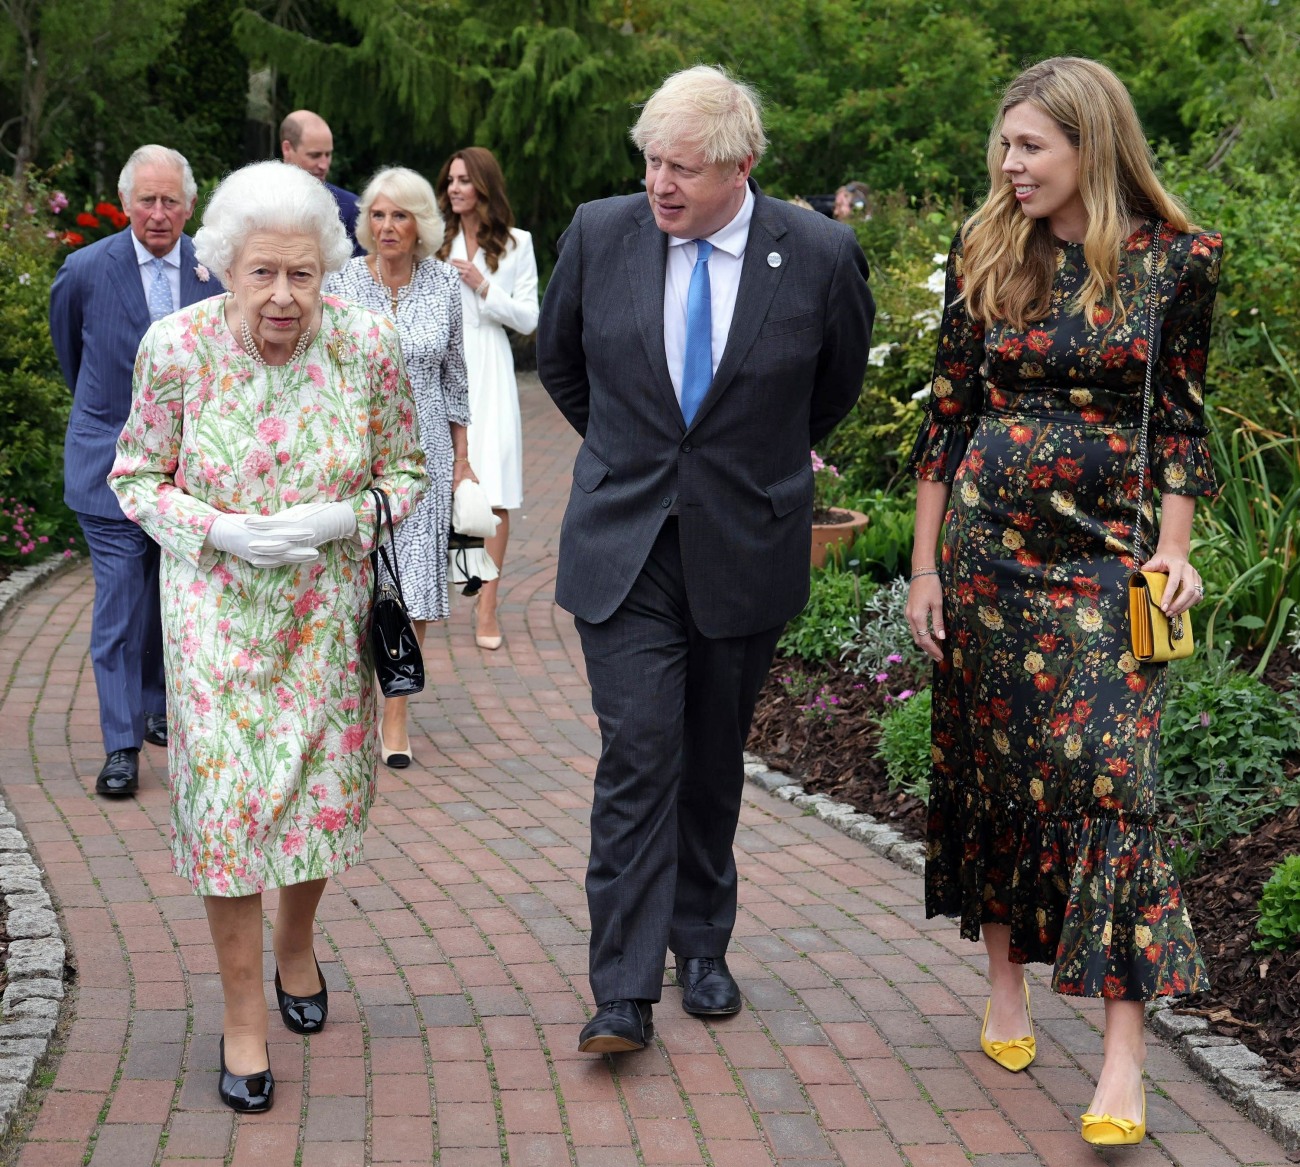 Queen Elizabeth II speaks to Joe and Jill Biden at the G7 Summit